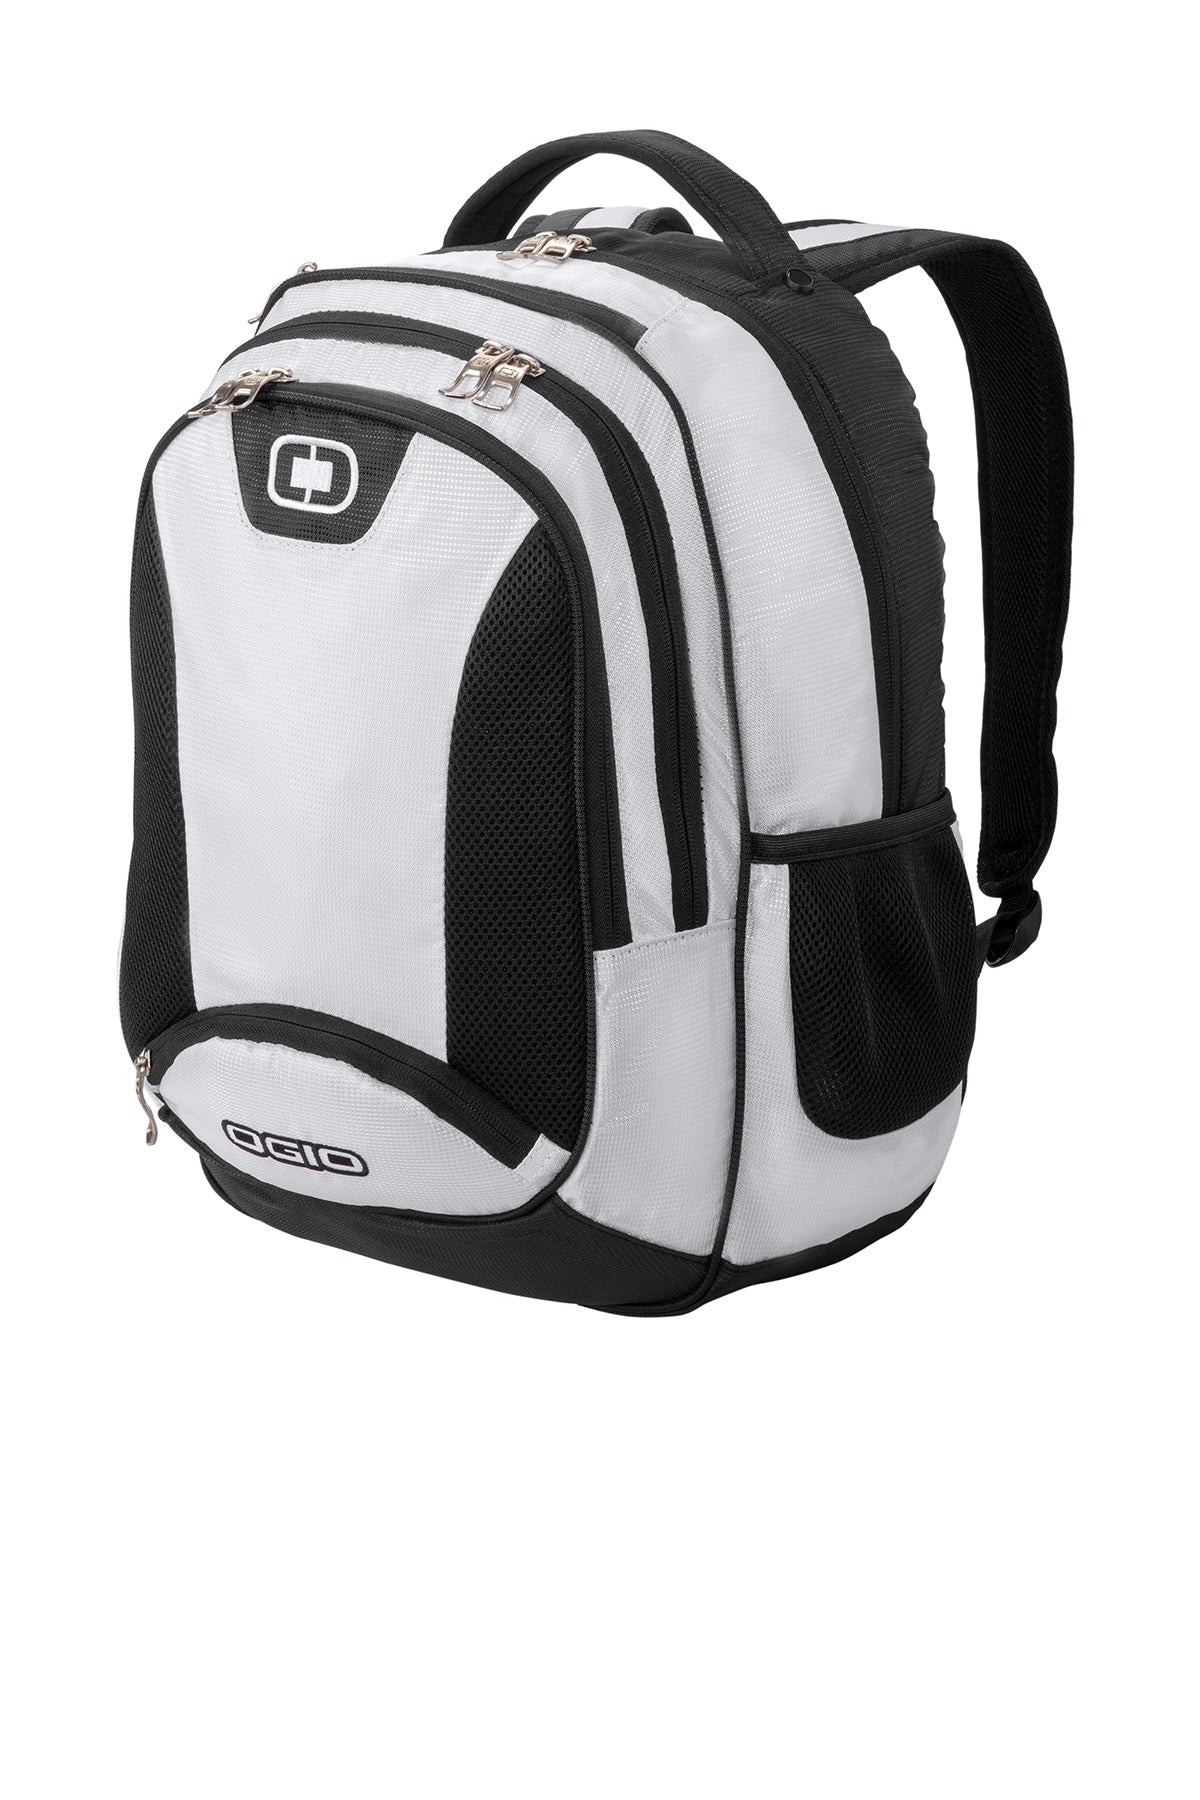 OGIO Bullion Customzied Backpacks, White/Black/Silver